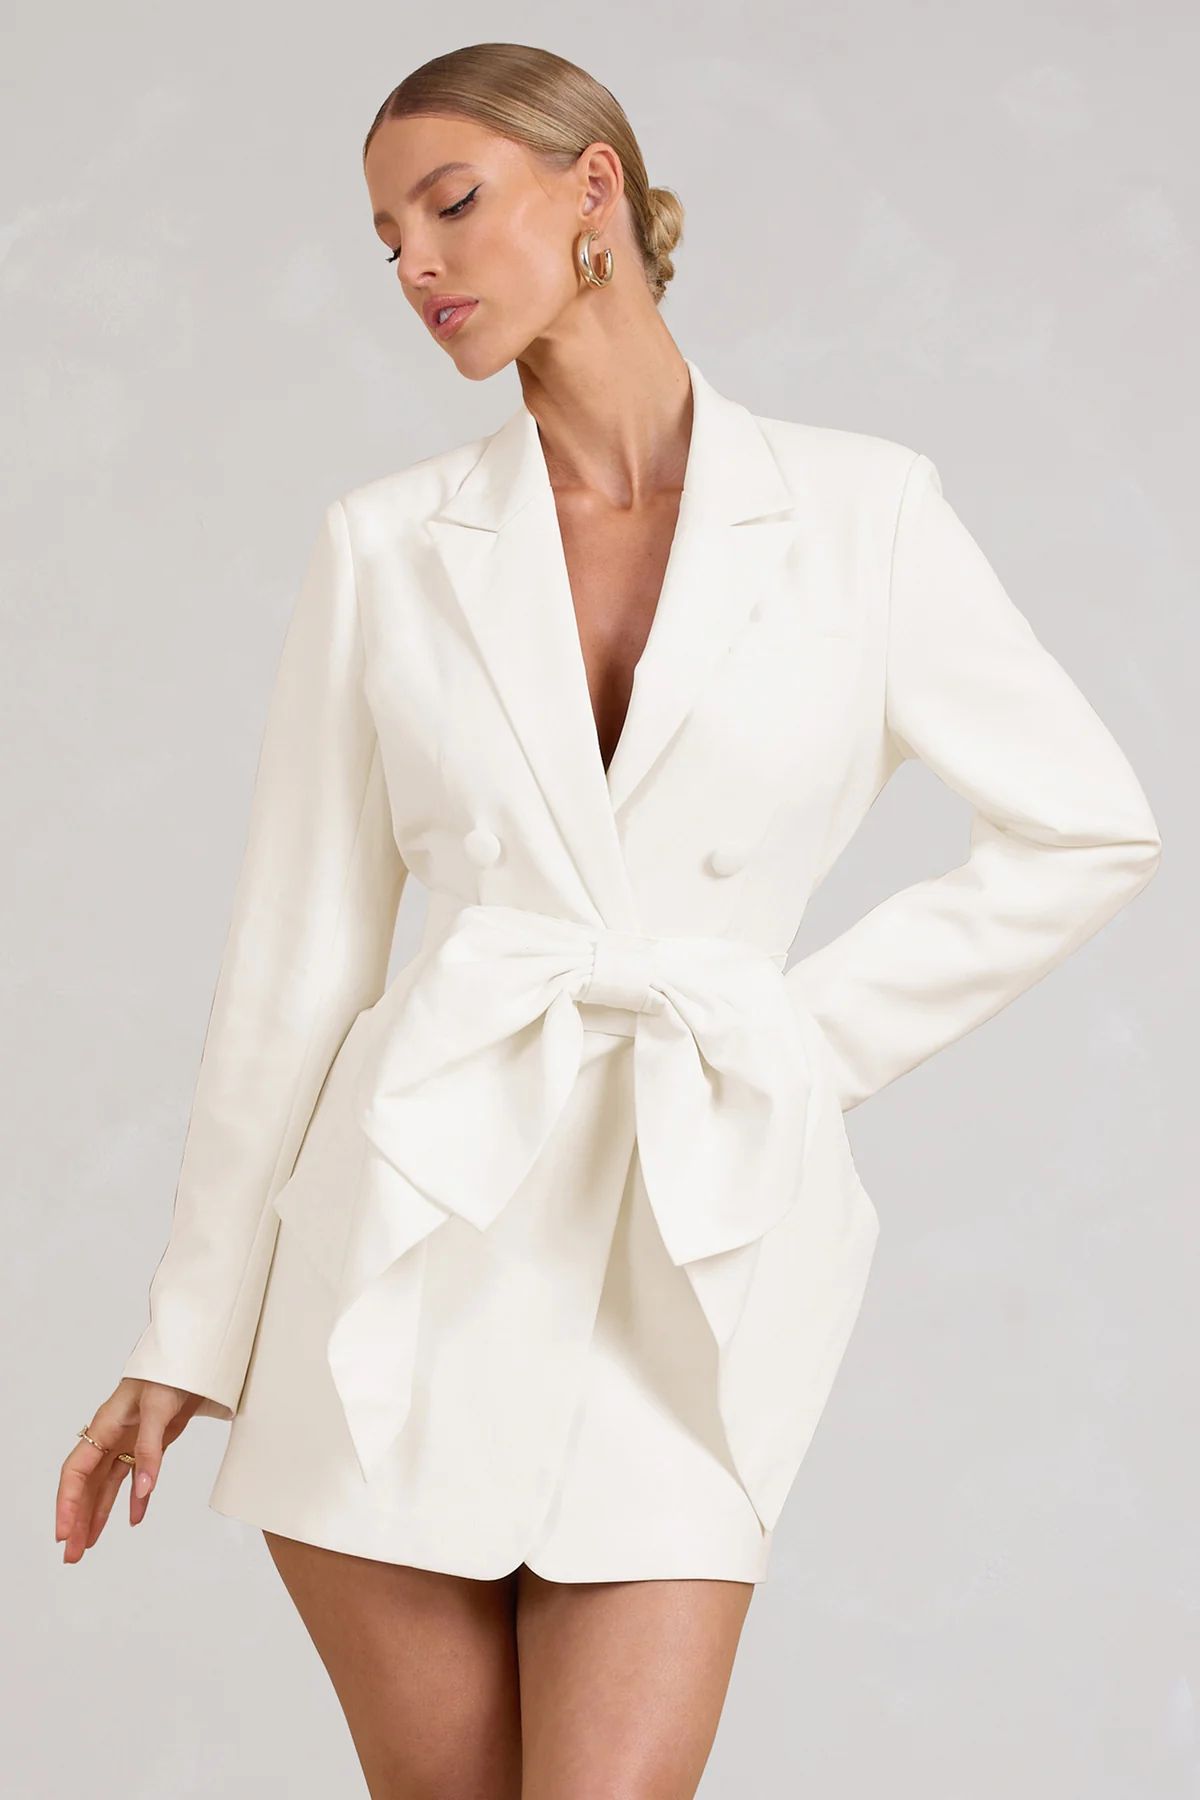 Prized | White Tailored Blazer Mini Dress With Bow | Club L London